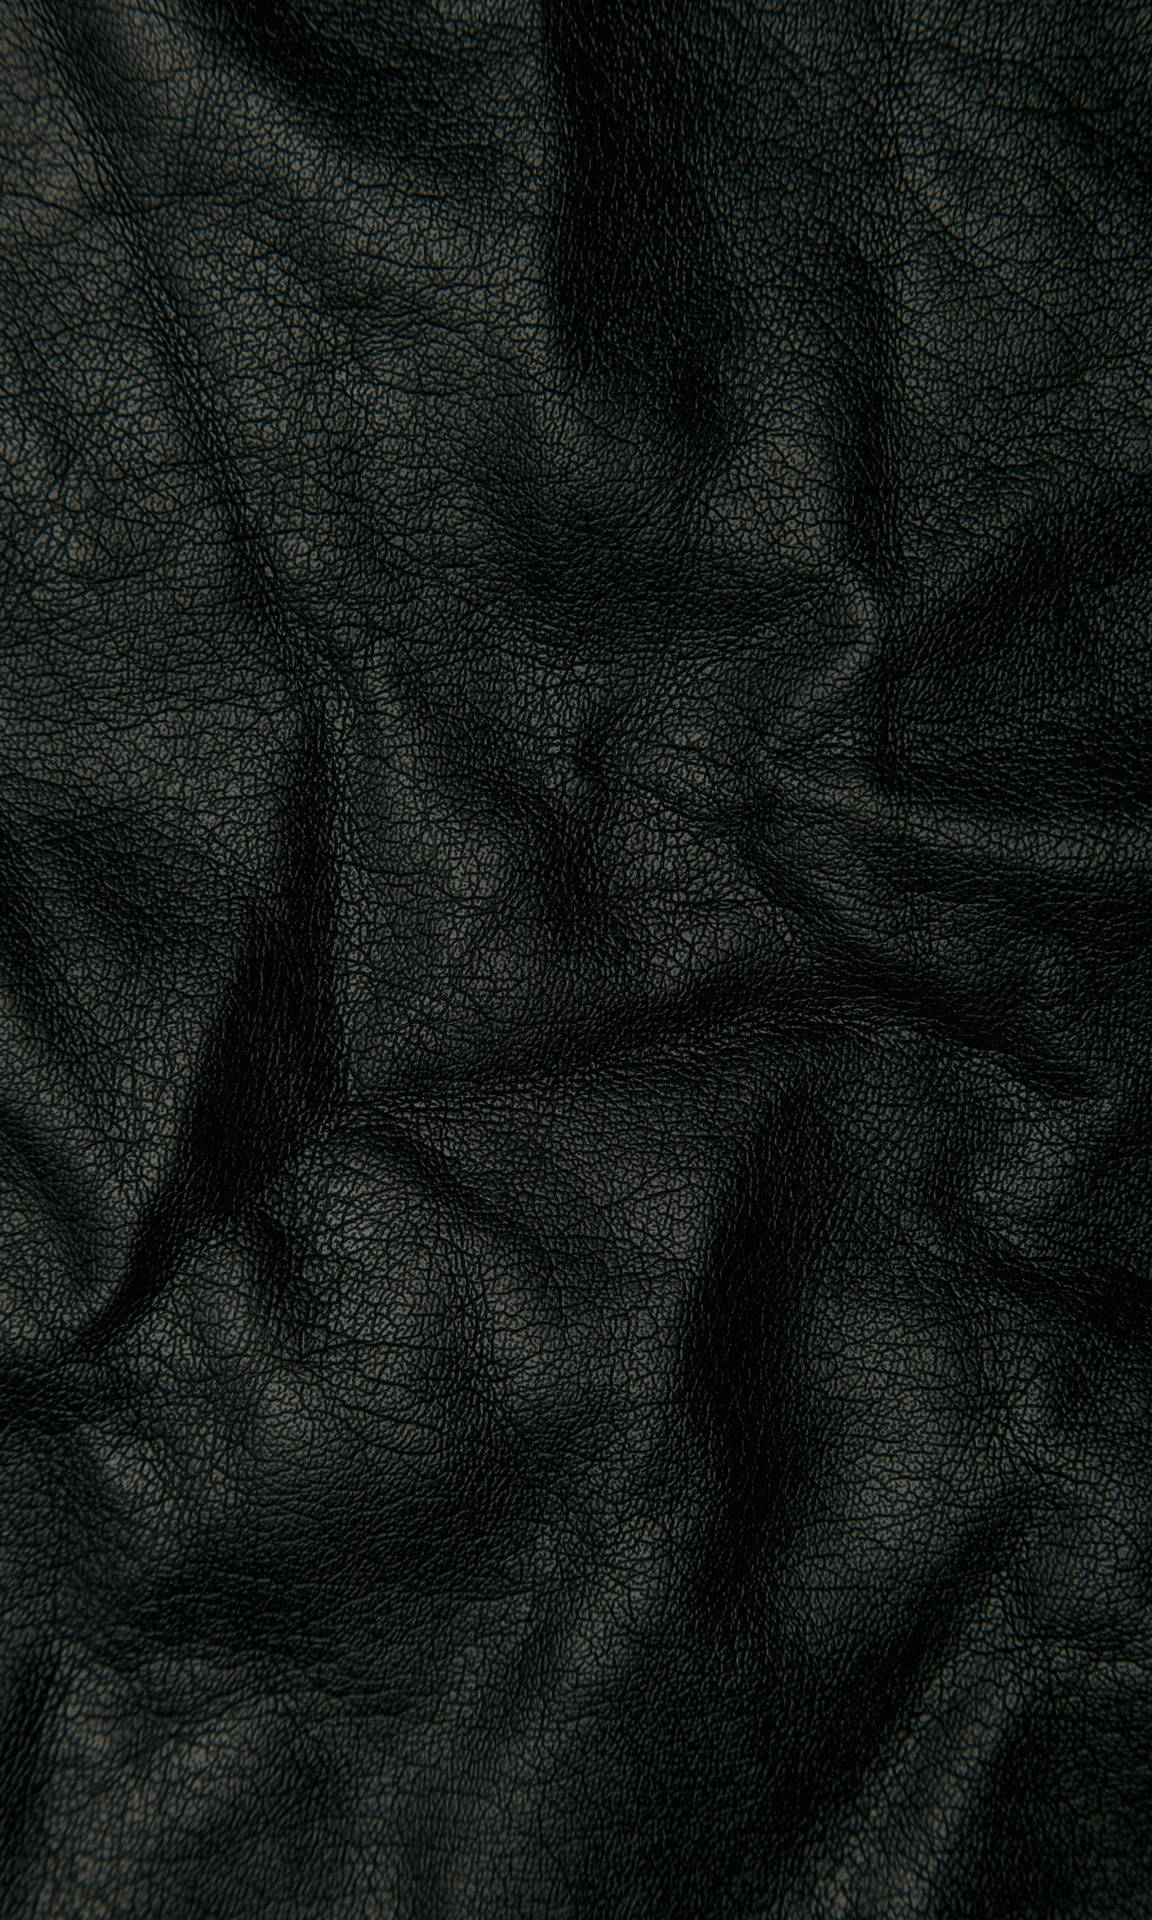 Black Leather 8k Phone Background